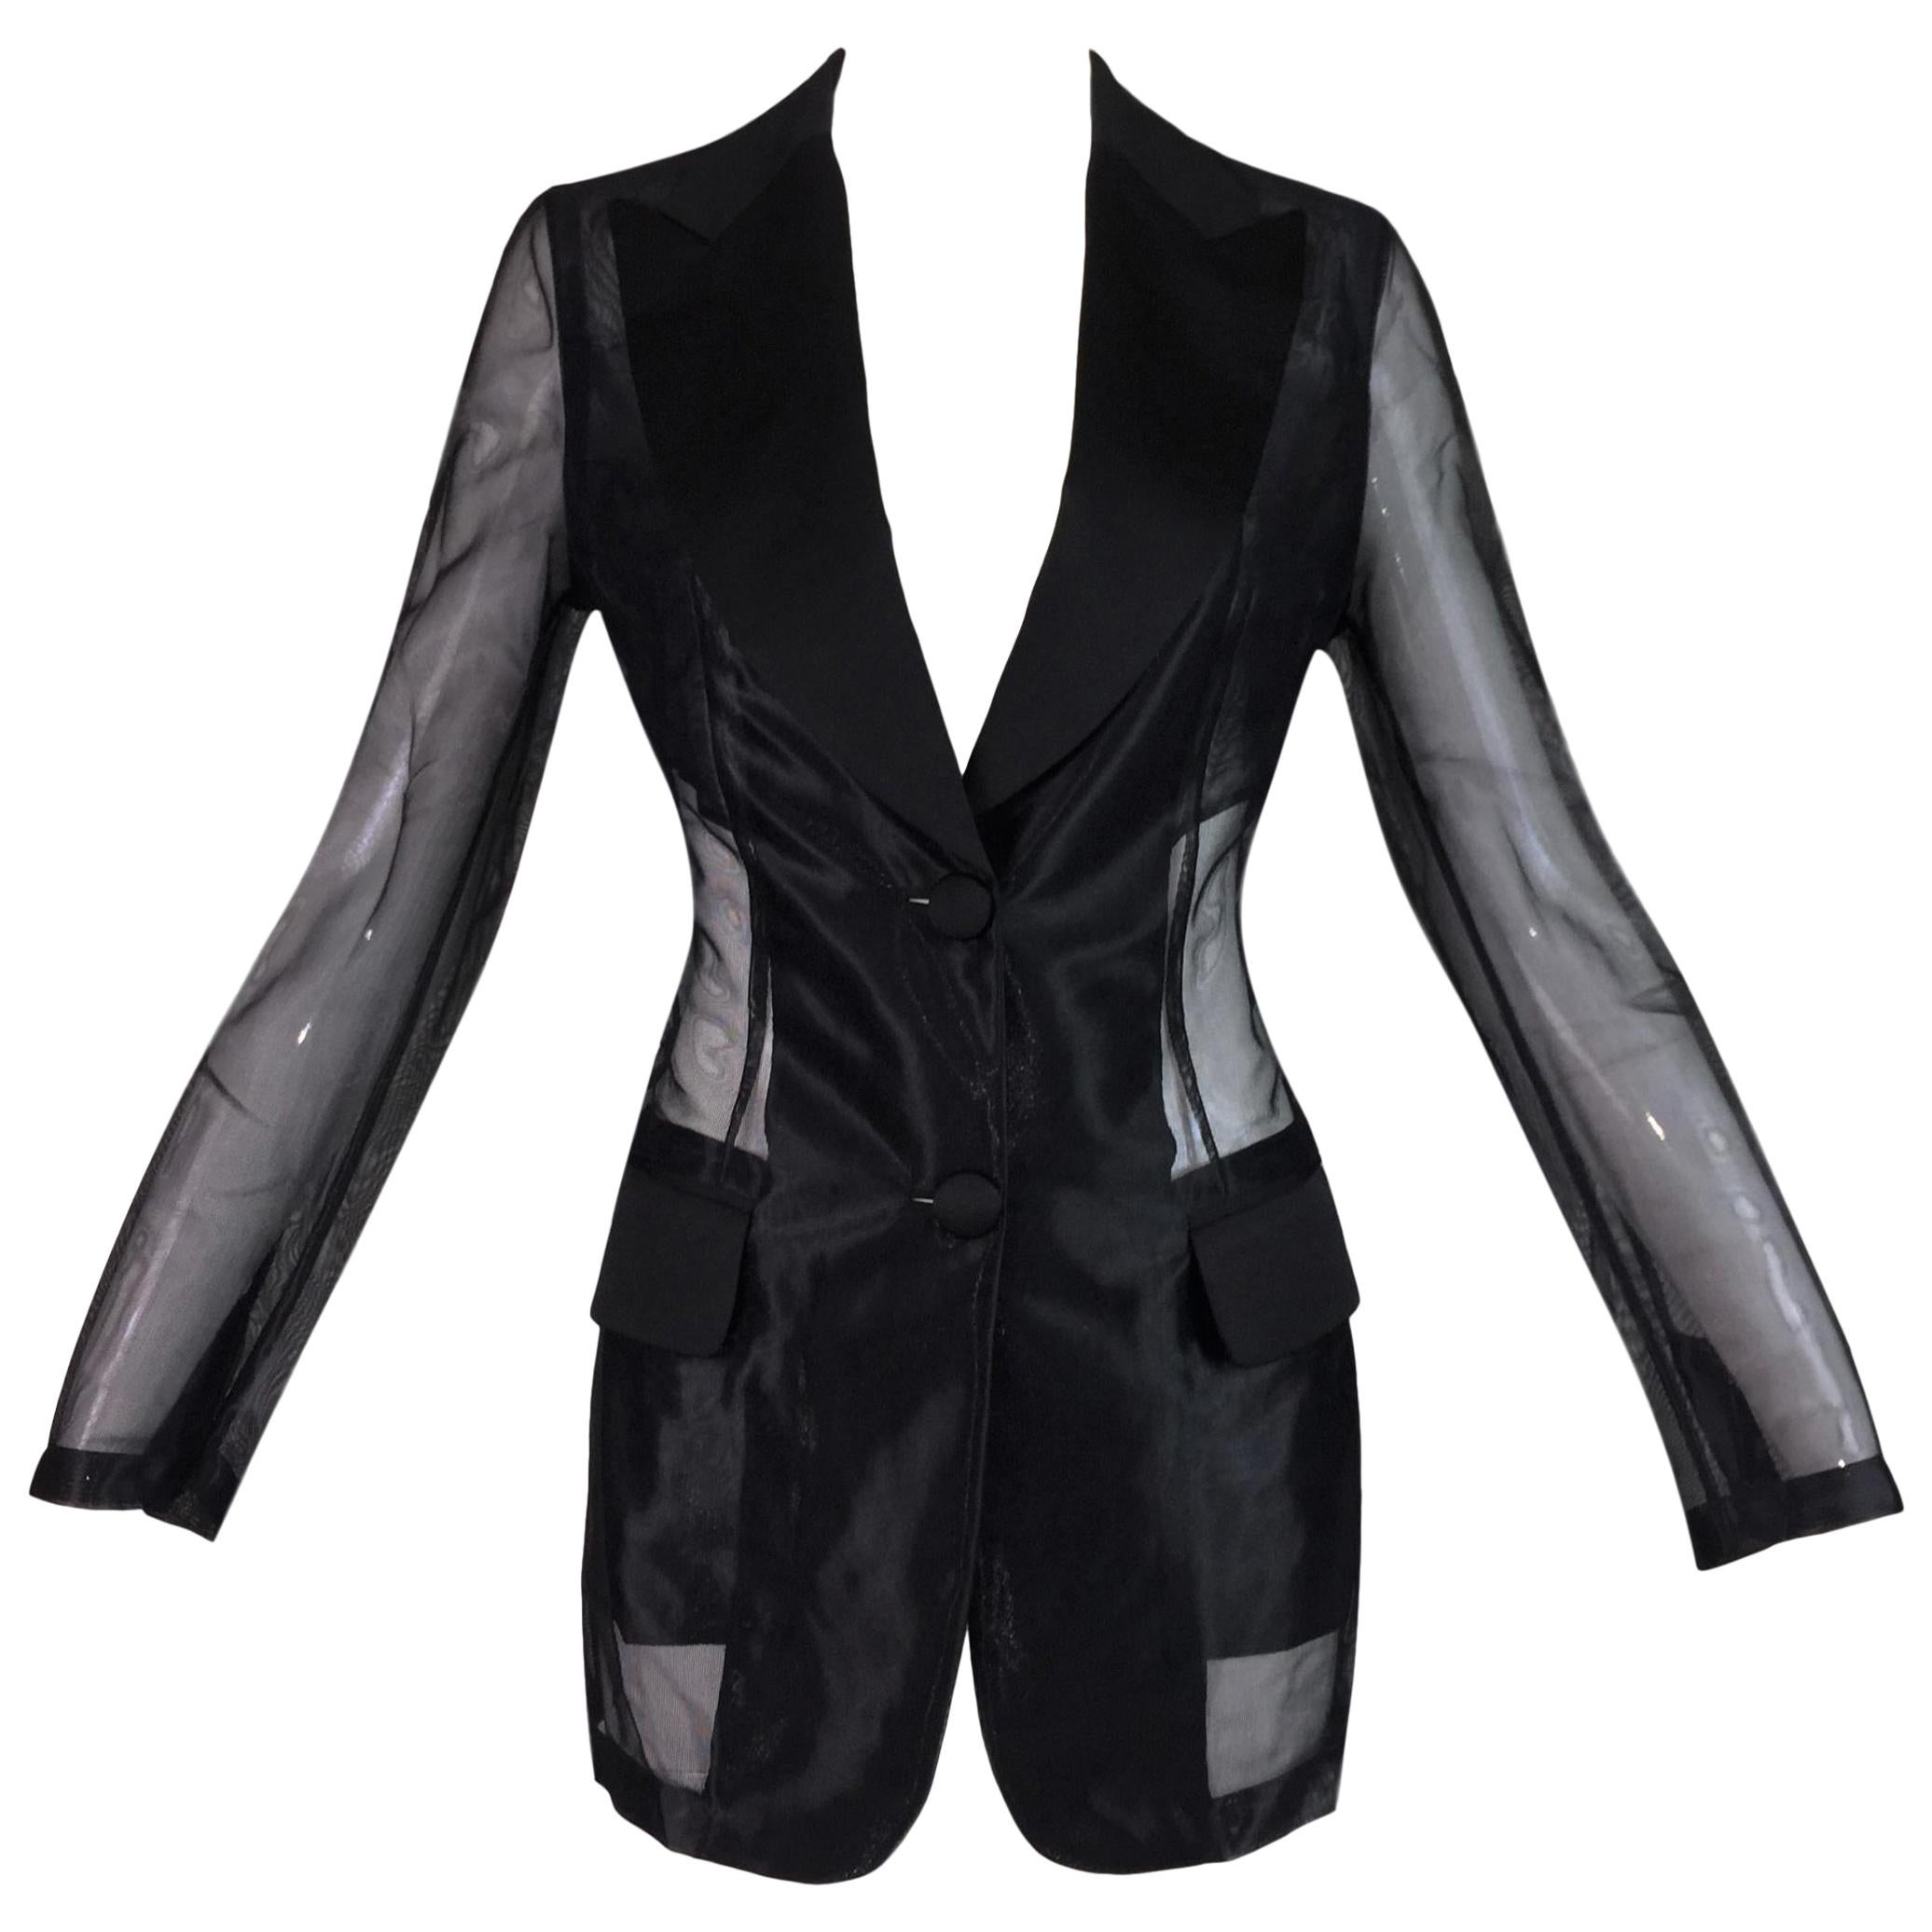 S/S 1995 Dolce & Gabbana Sheer Black Nylon Long Blazer Jacket